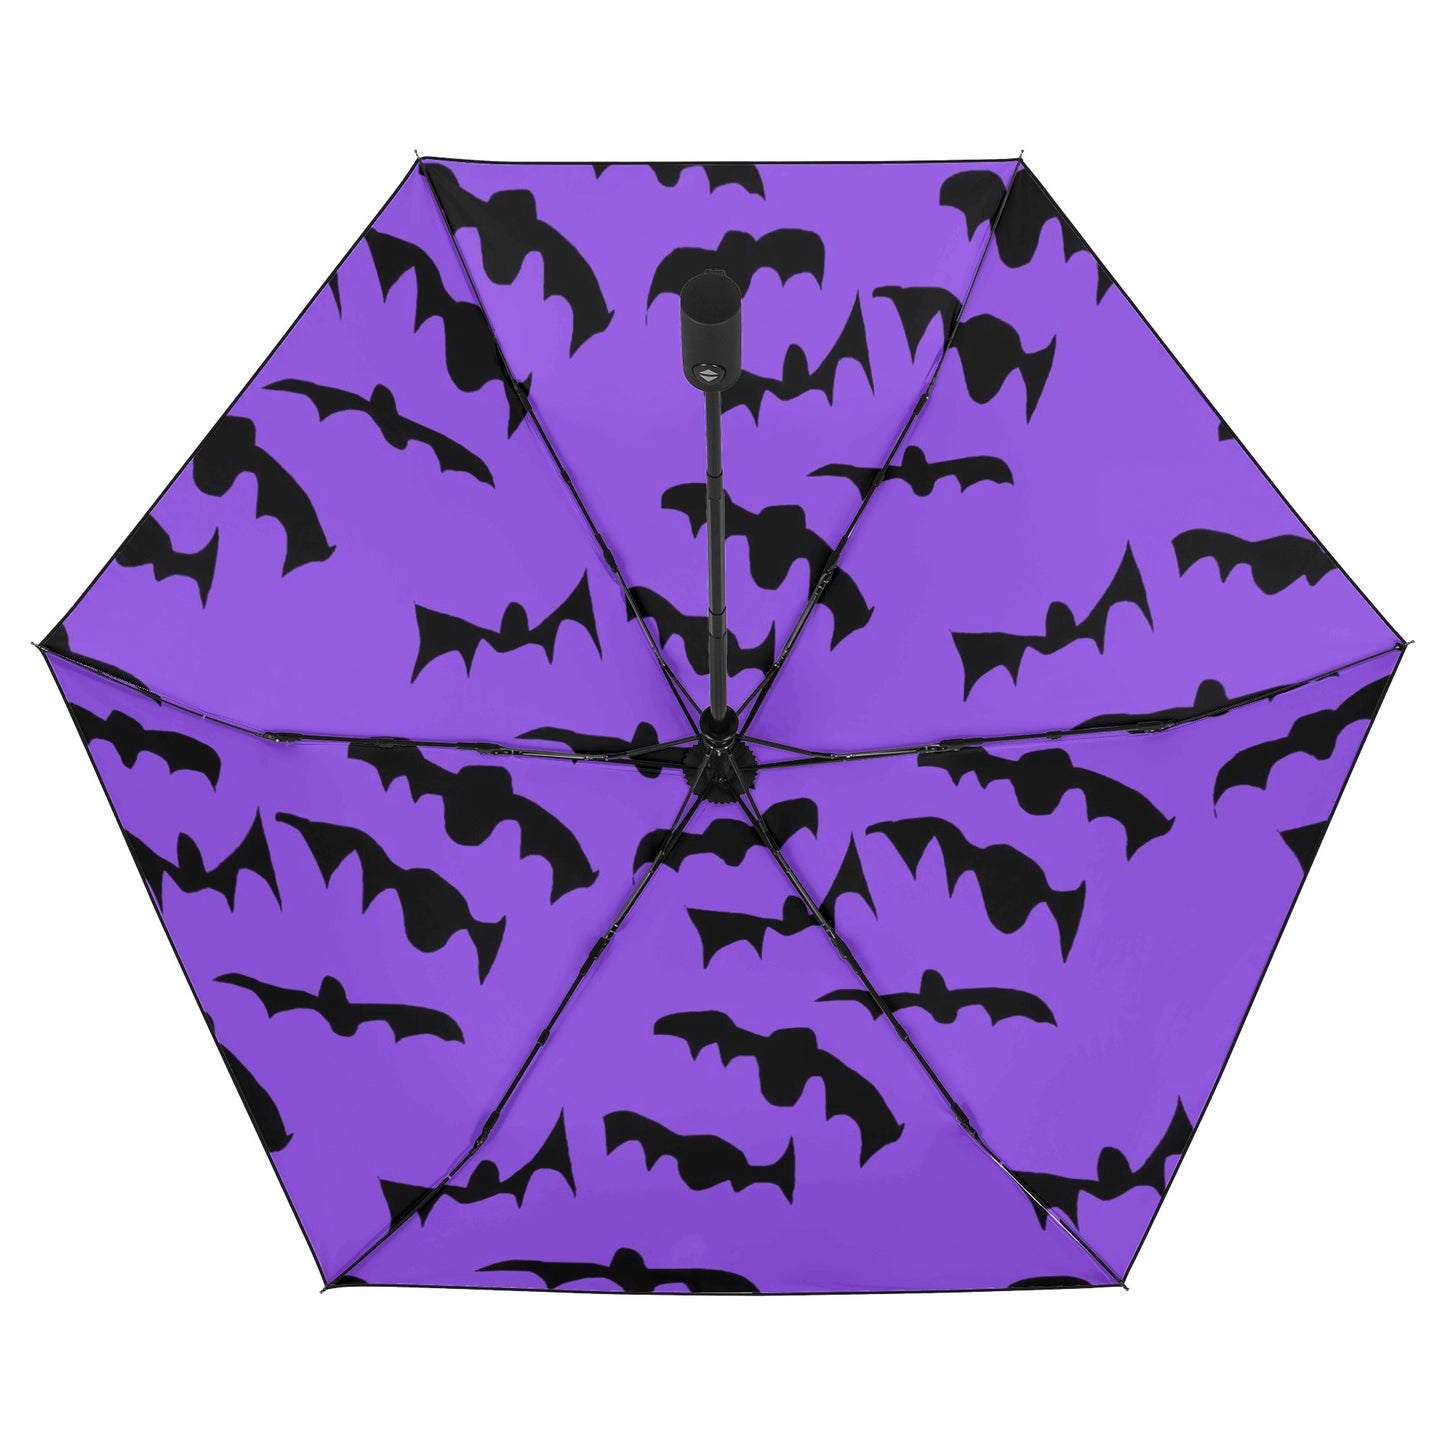 Bats Pattern Fully Auto Open & Close Umbrella Printing Inside